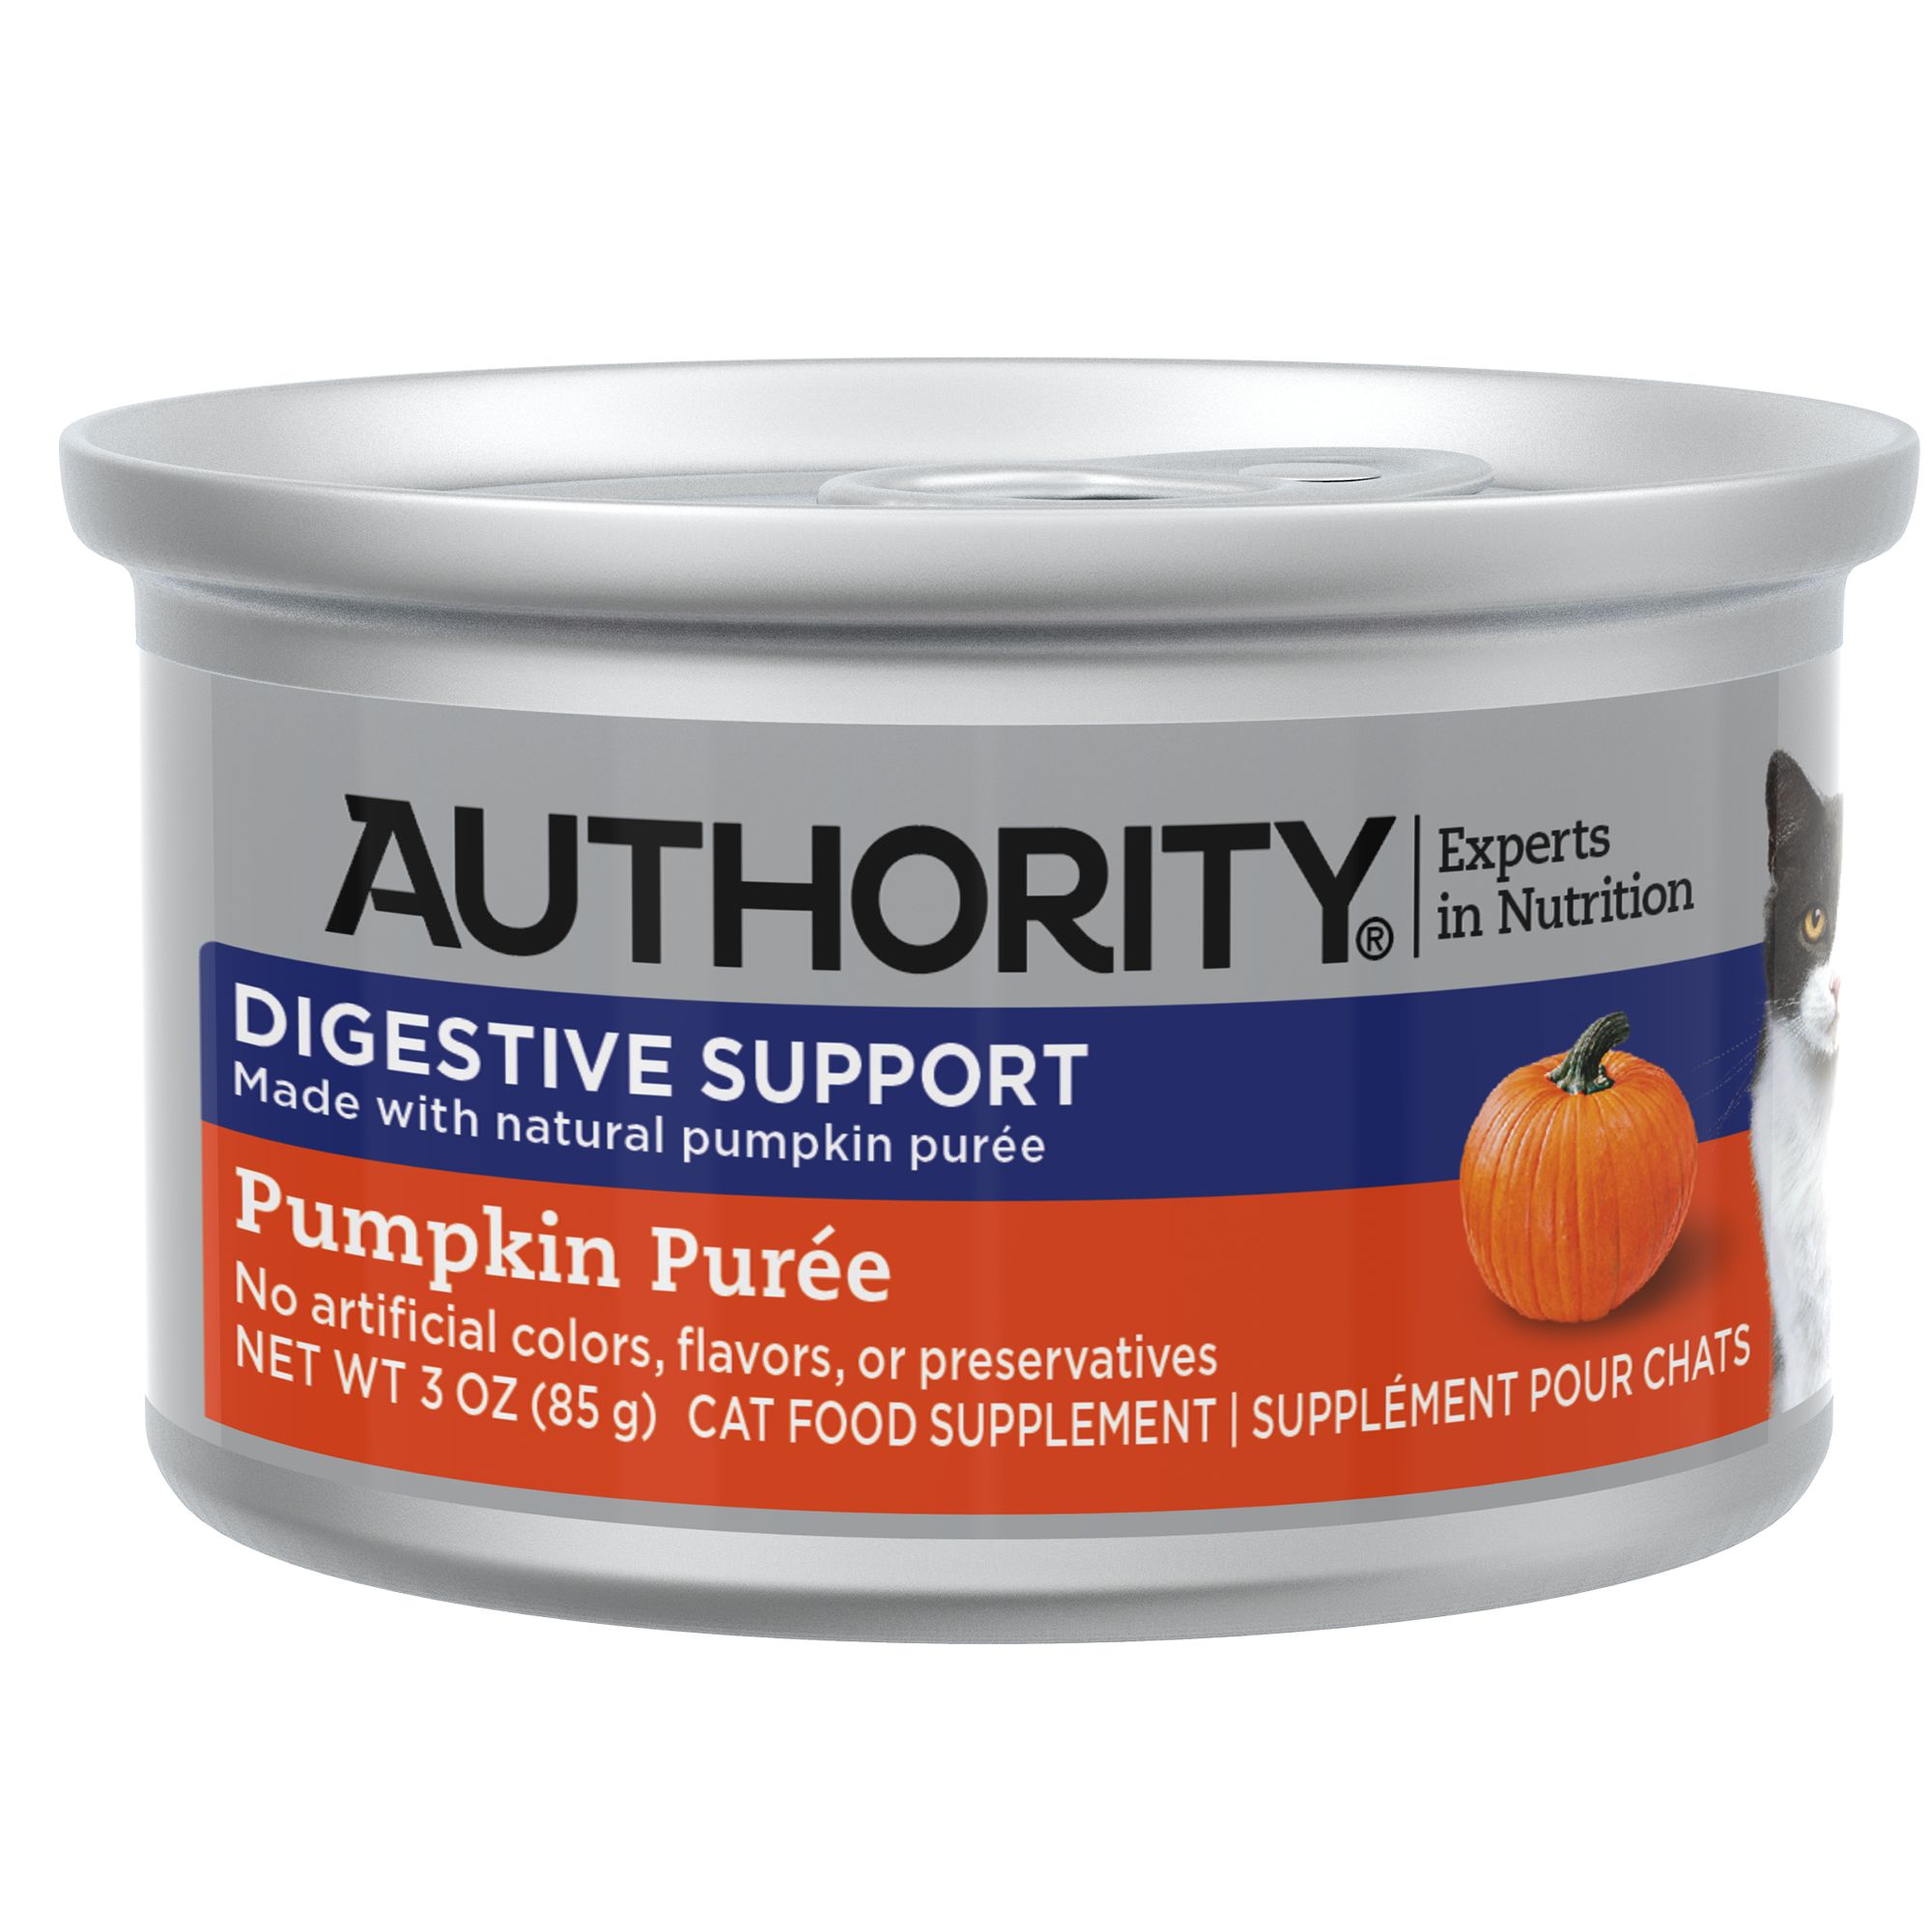 Authority Digestive Support Cat Food Supplement Pumpkin